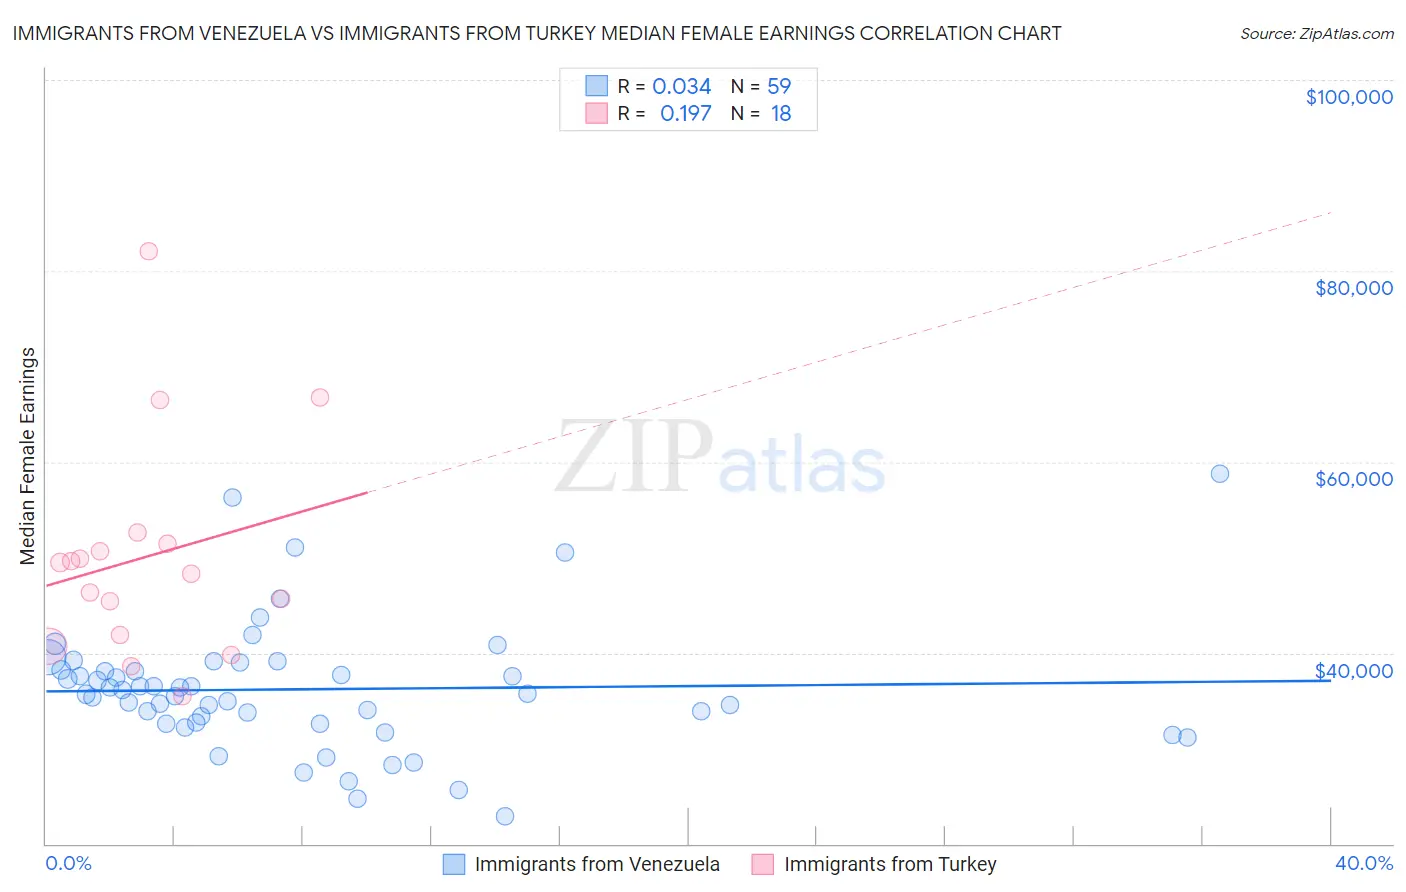 Immigrants from Venezuela vs Immigrants from Turkey Median Female Earnings